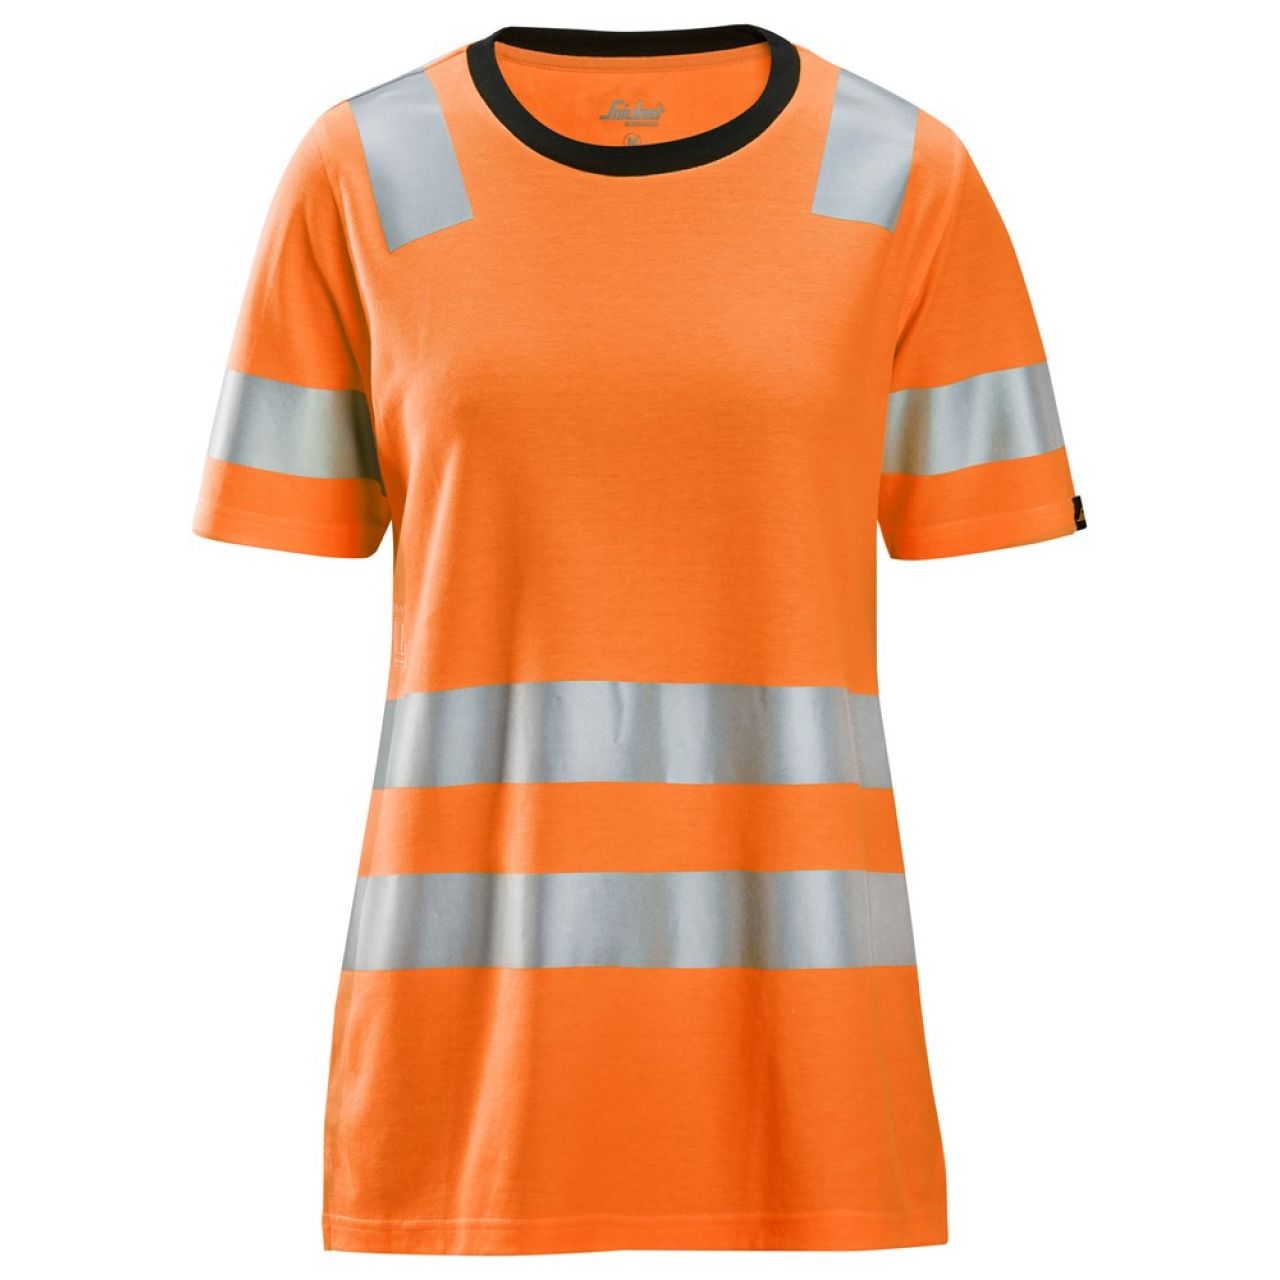 2537 Camiseta de manga corta para mujer de alta visibilidad clase 2 naranja talla M